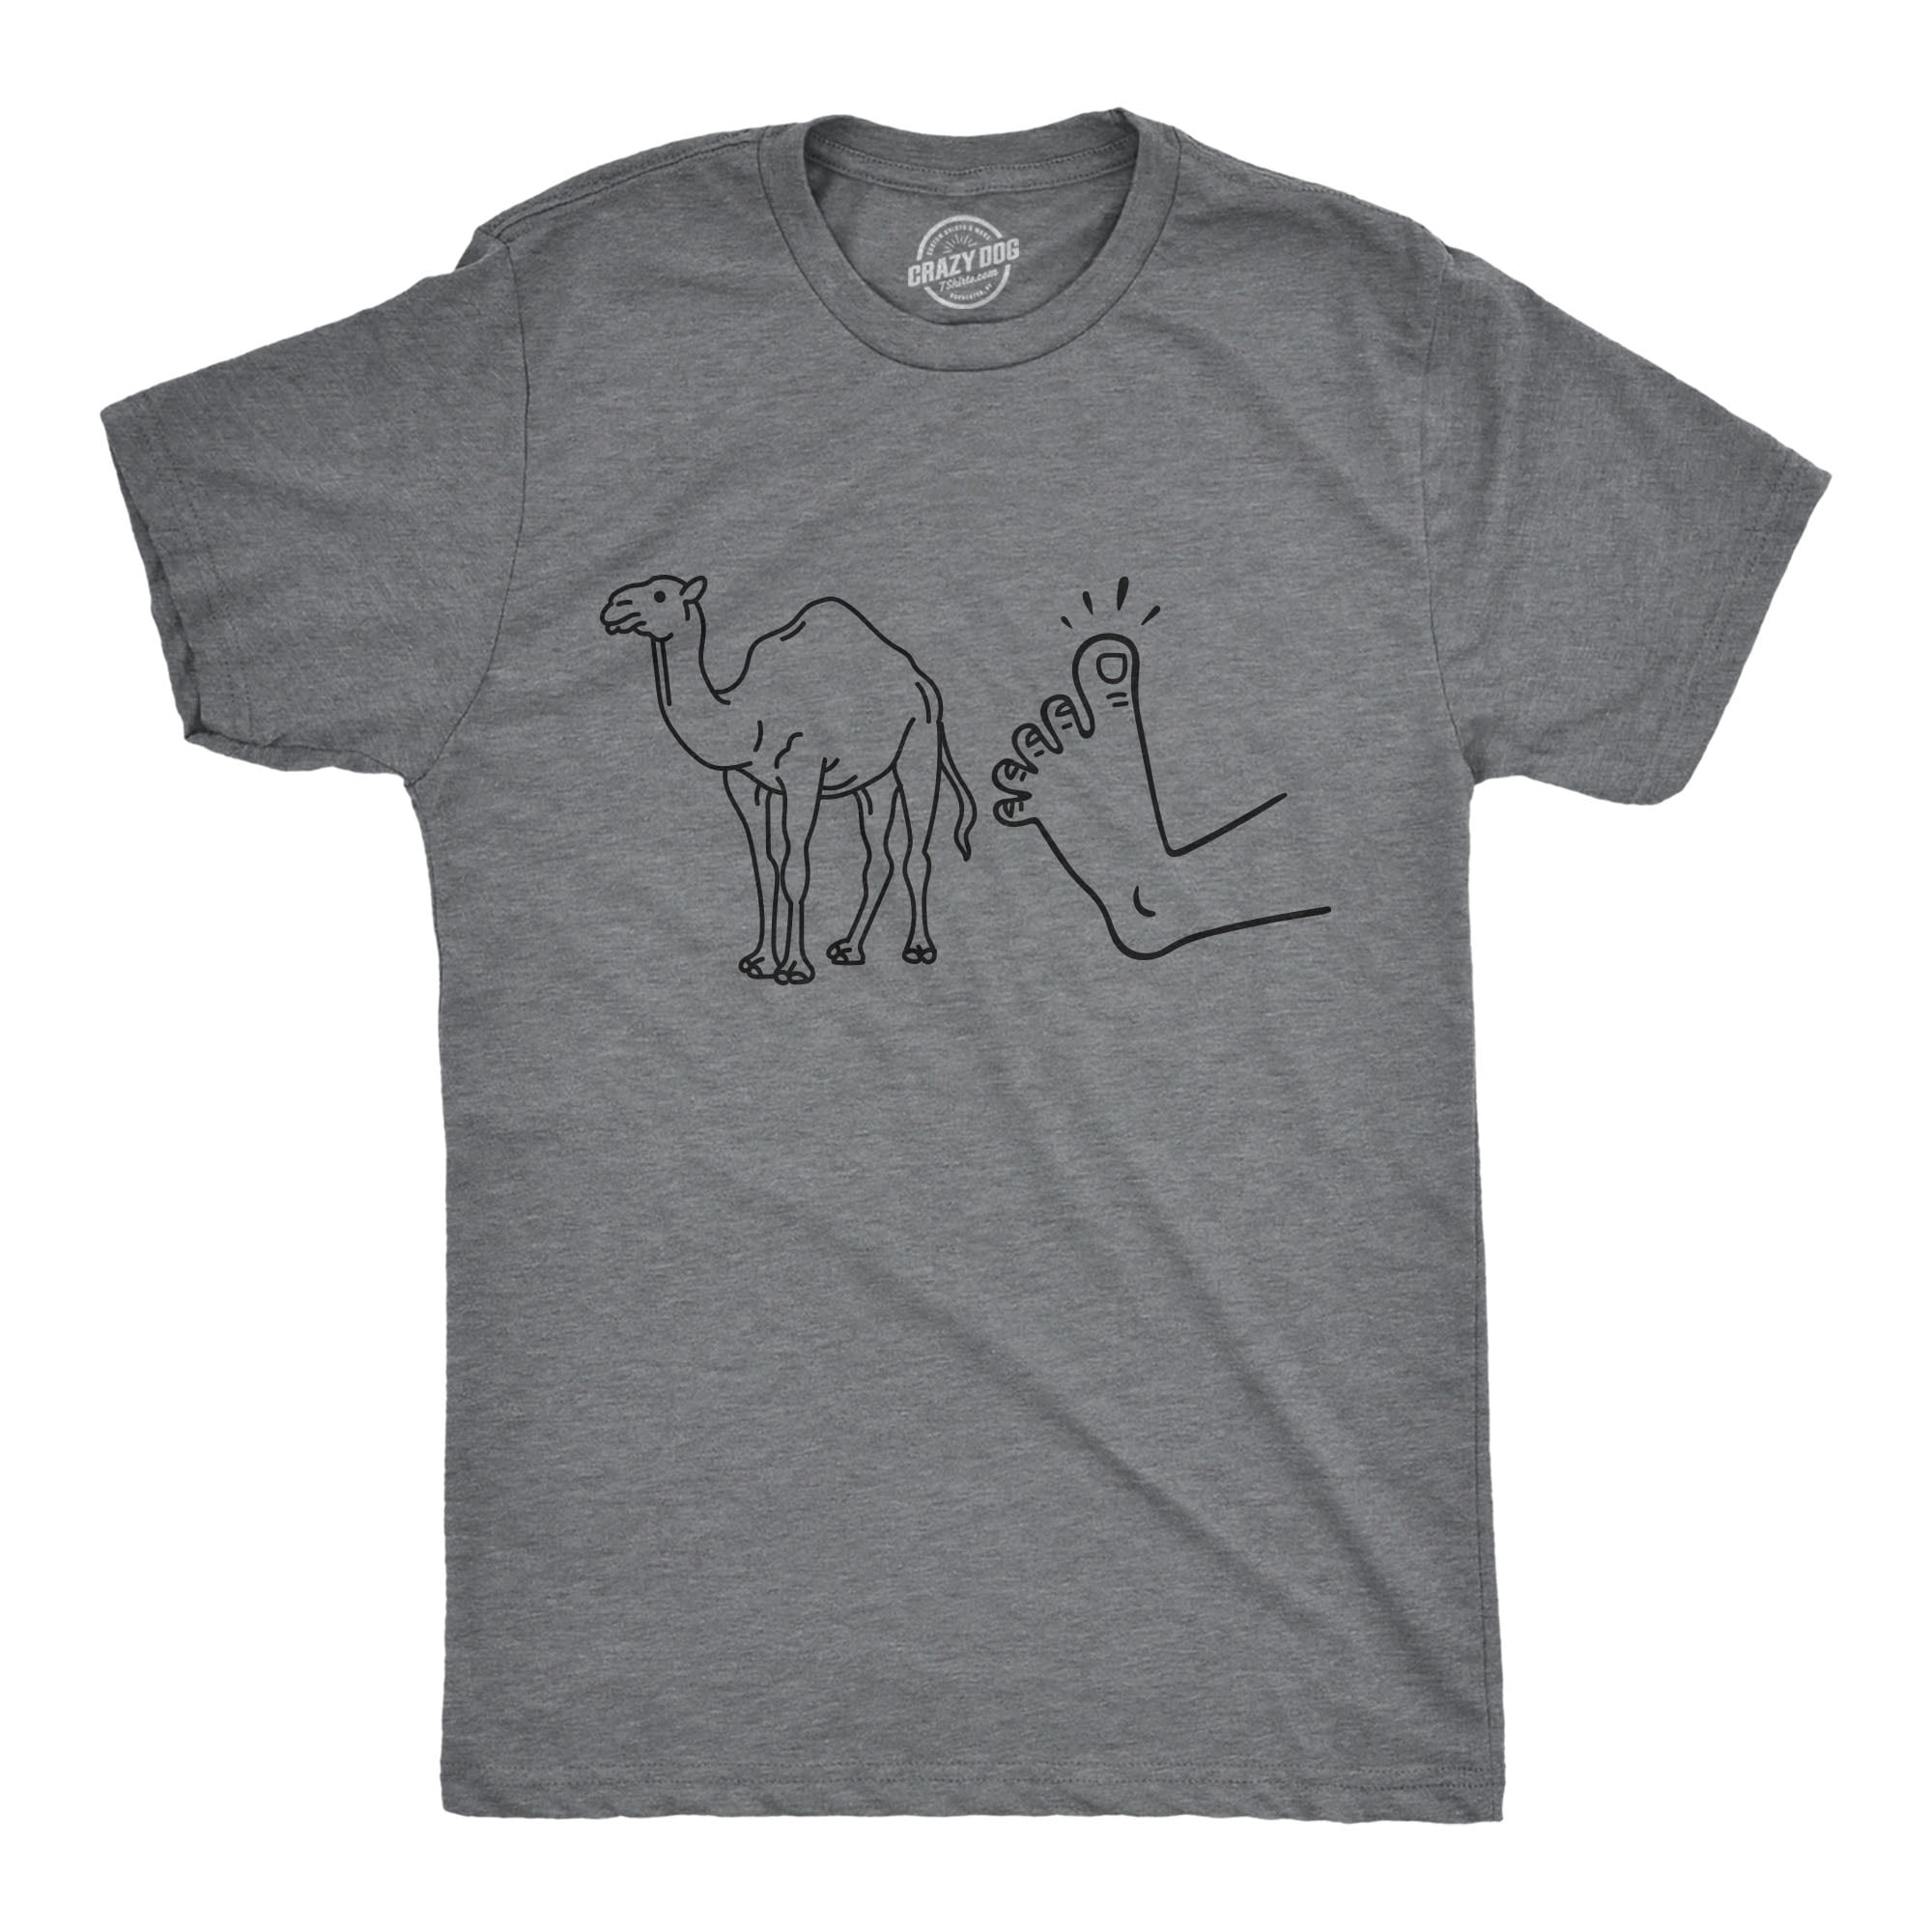 Mens Camel Toe Tshirt Funny Sarcastic Literal Innuendo Graphic Novelty Tee  (Dark Heather Grey) - S Graphic Tees 